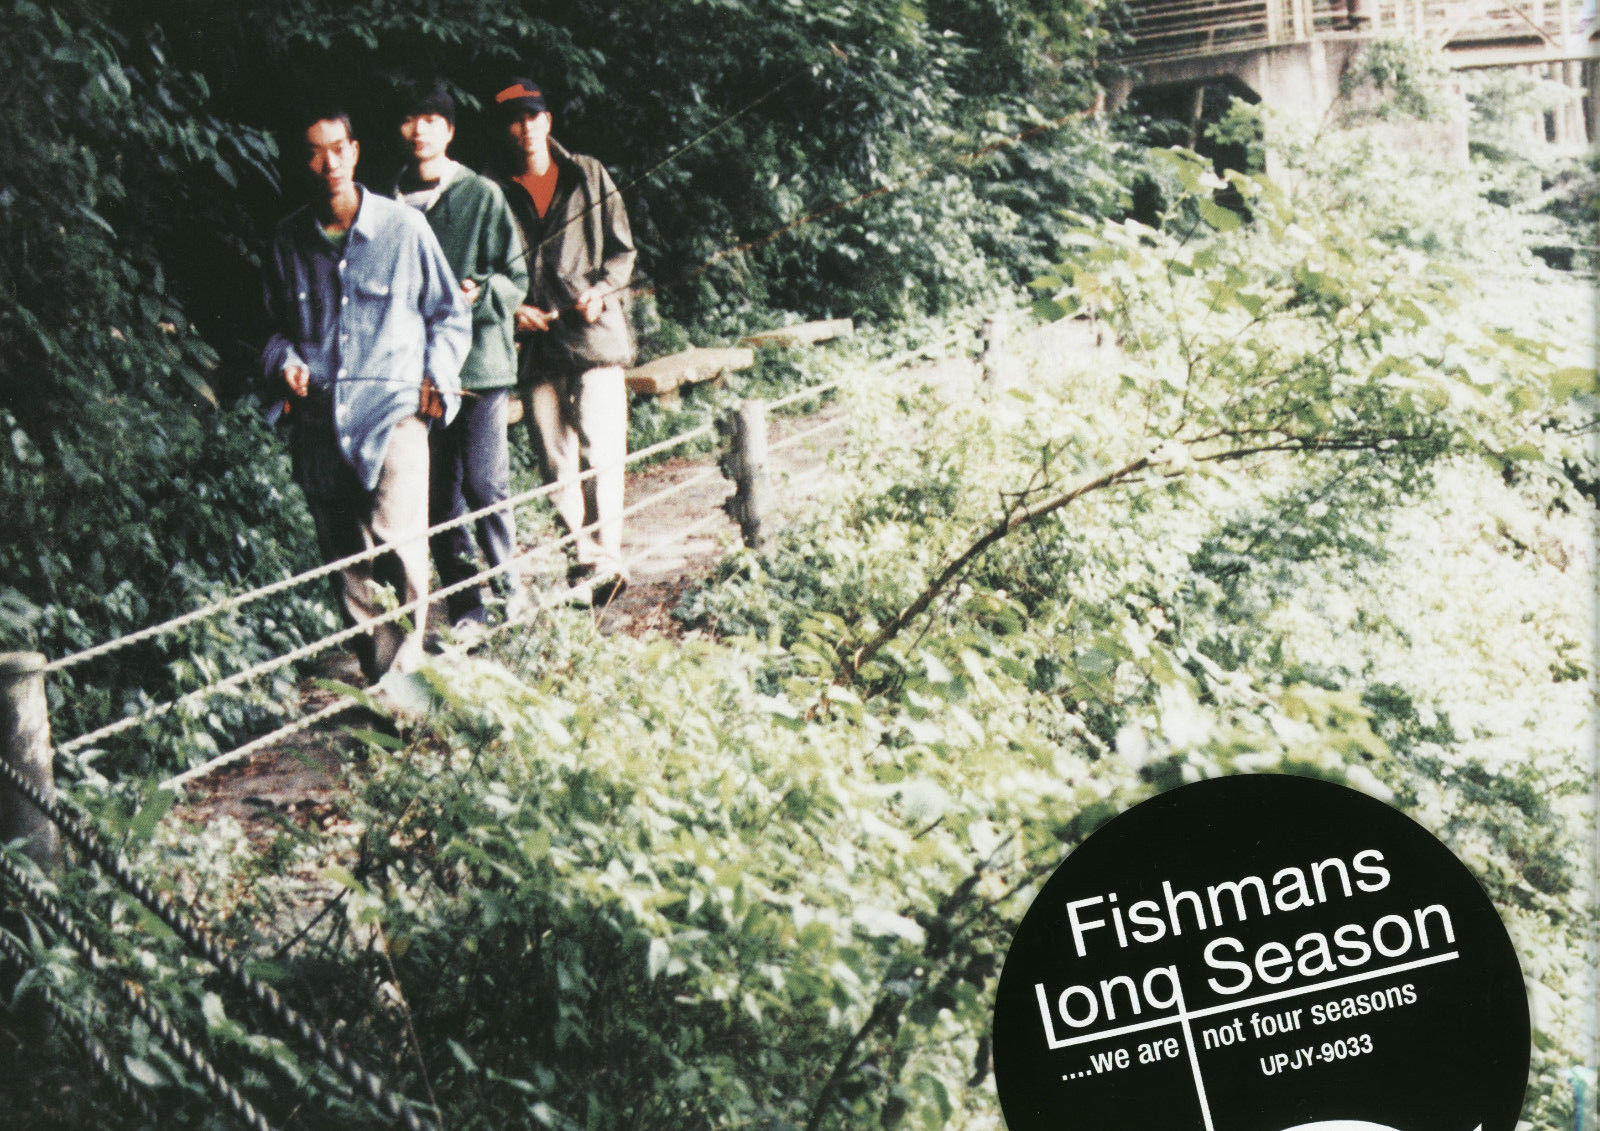 FISHMANS Long Season LP Vinyl Record JAPAN UPJY-9033 NEW Sealed s5151